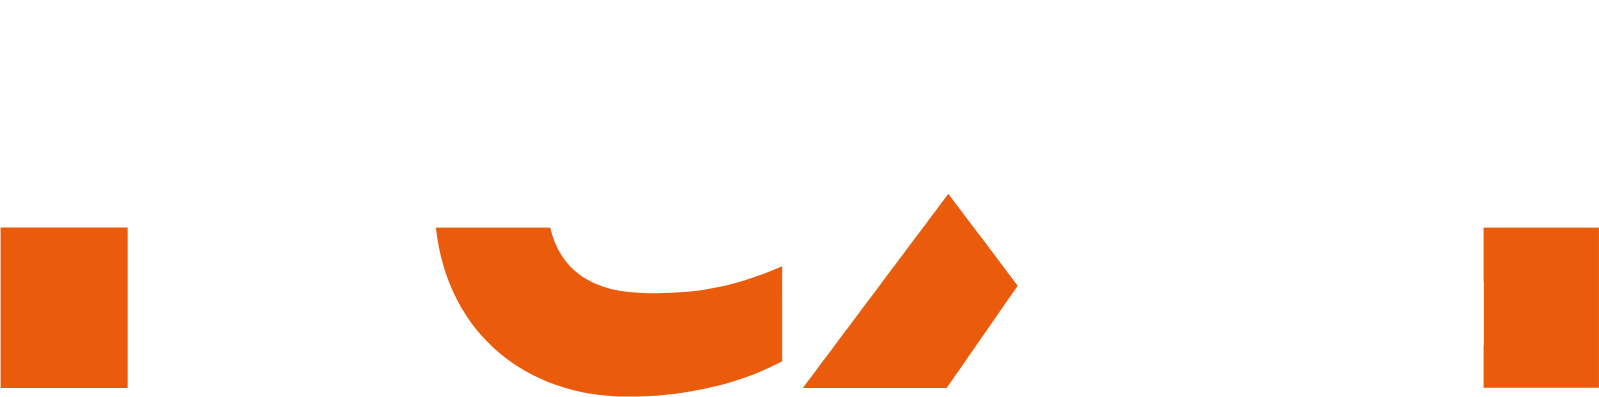 Nexa Resources logo large for dark backgrounds (transparent PNG)